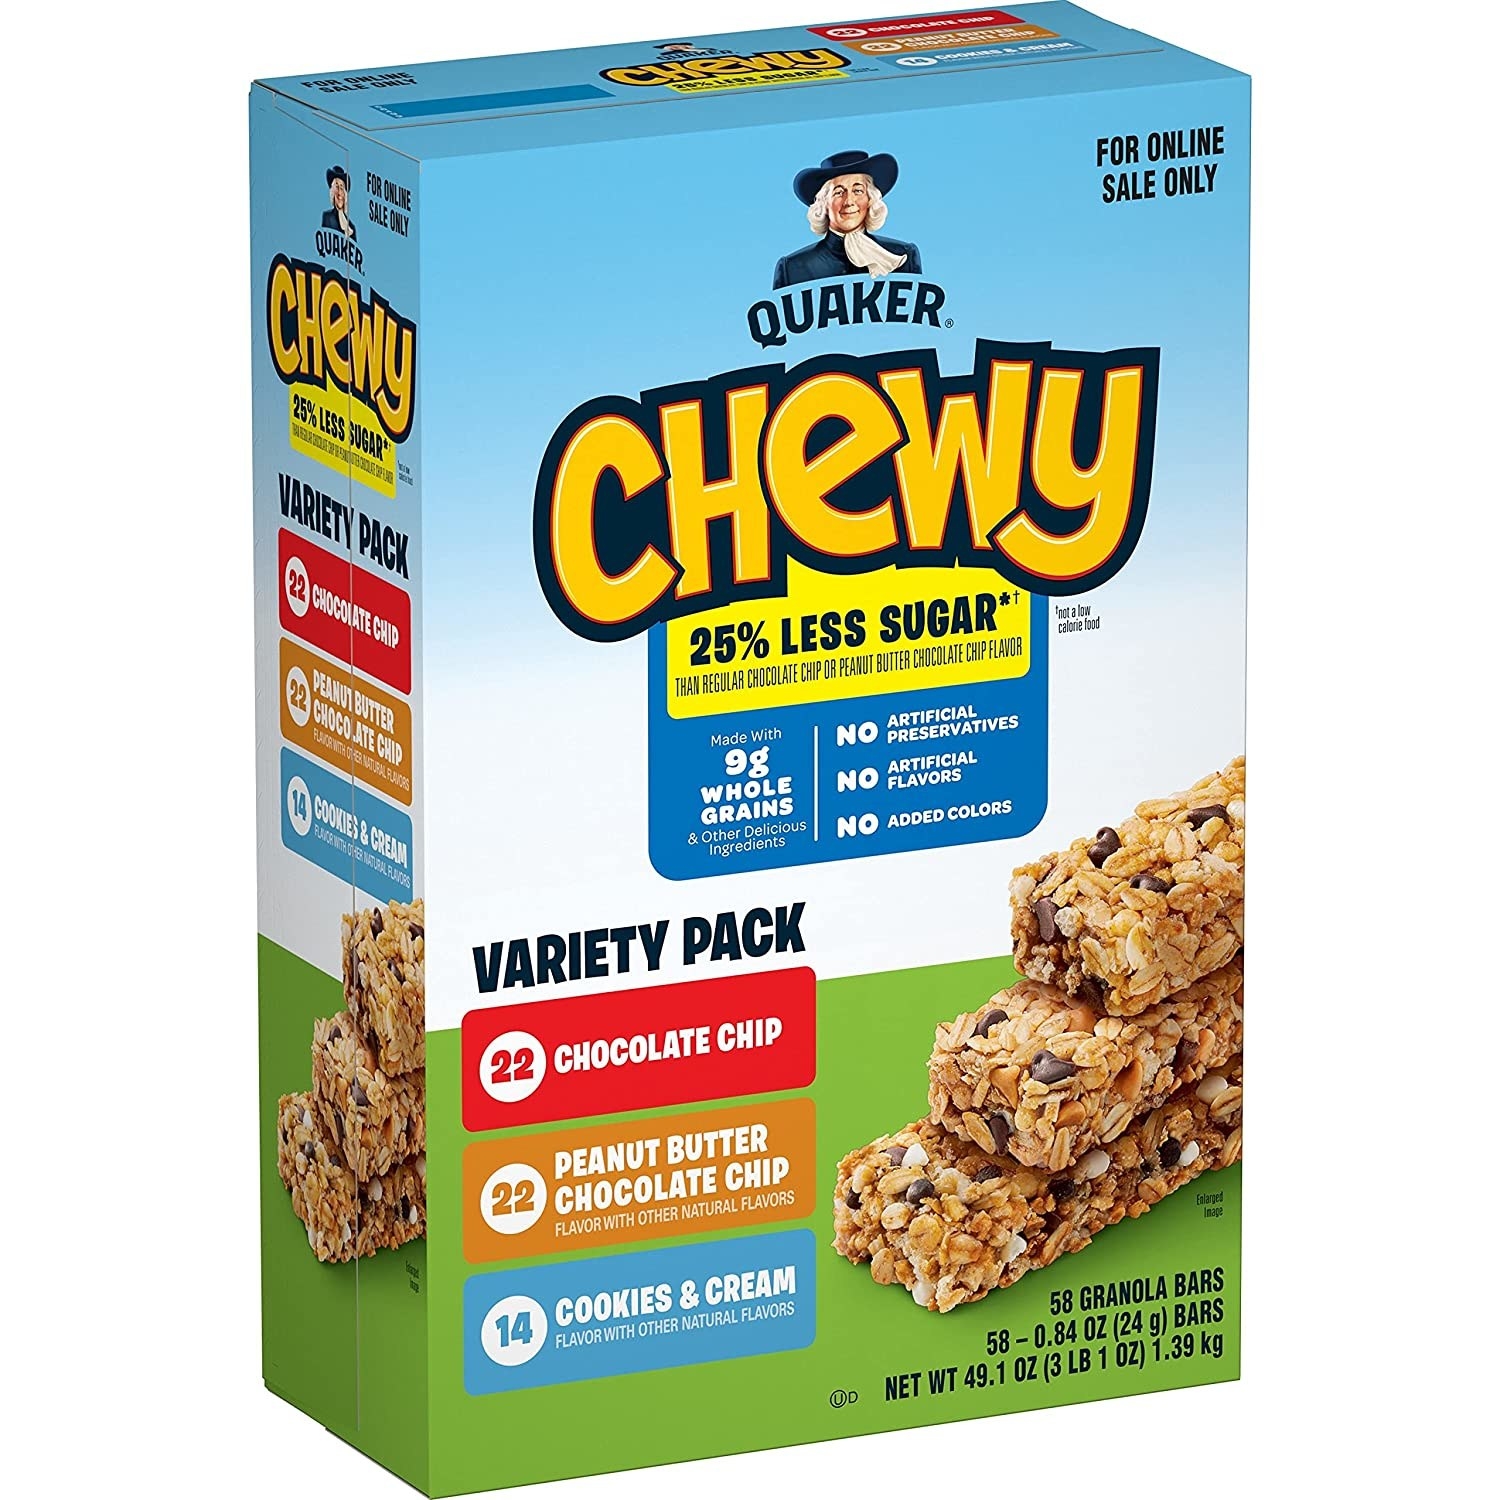 the box of quaker chewy granola bars